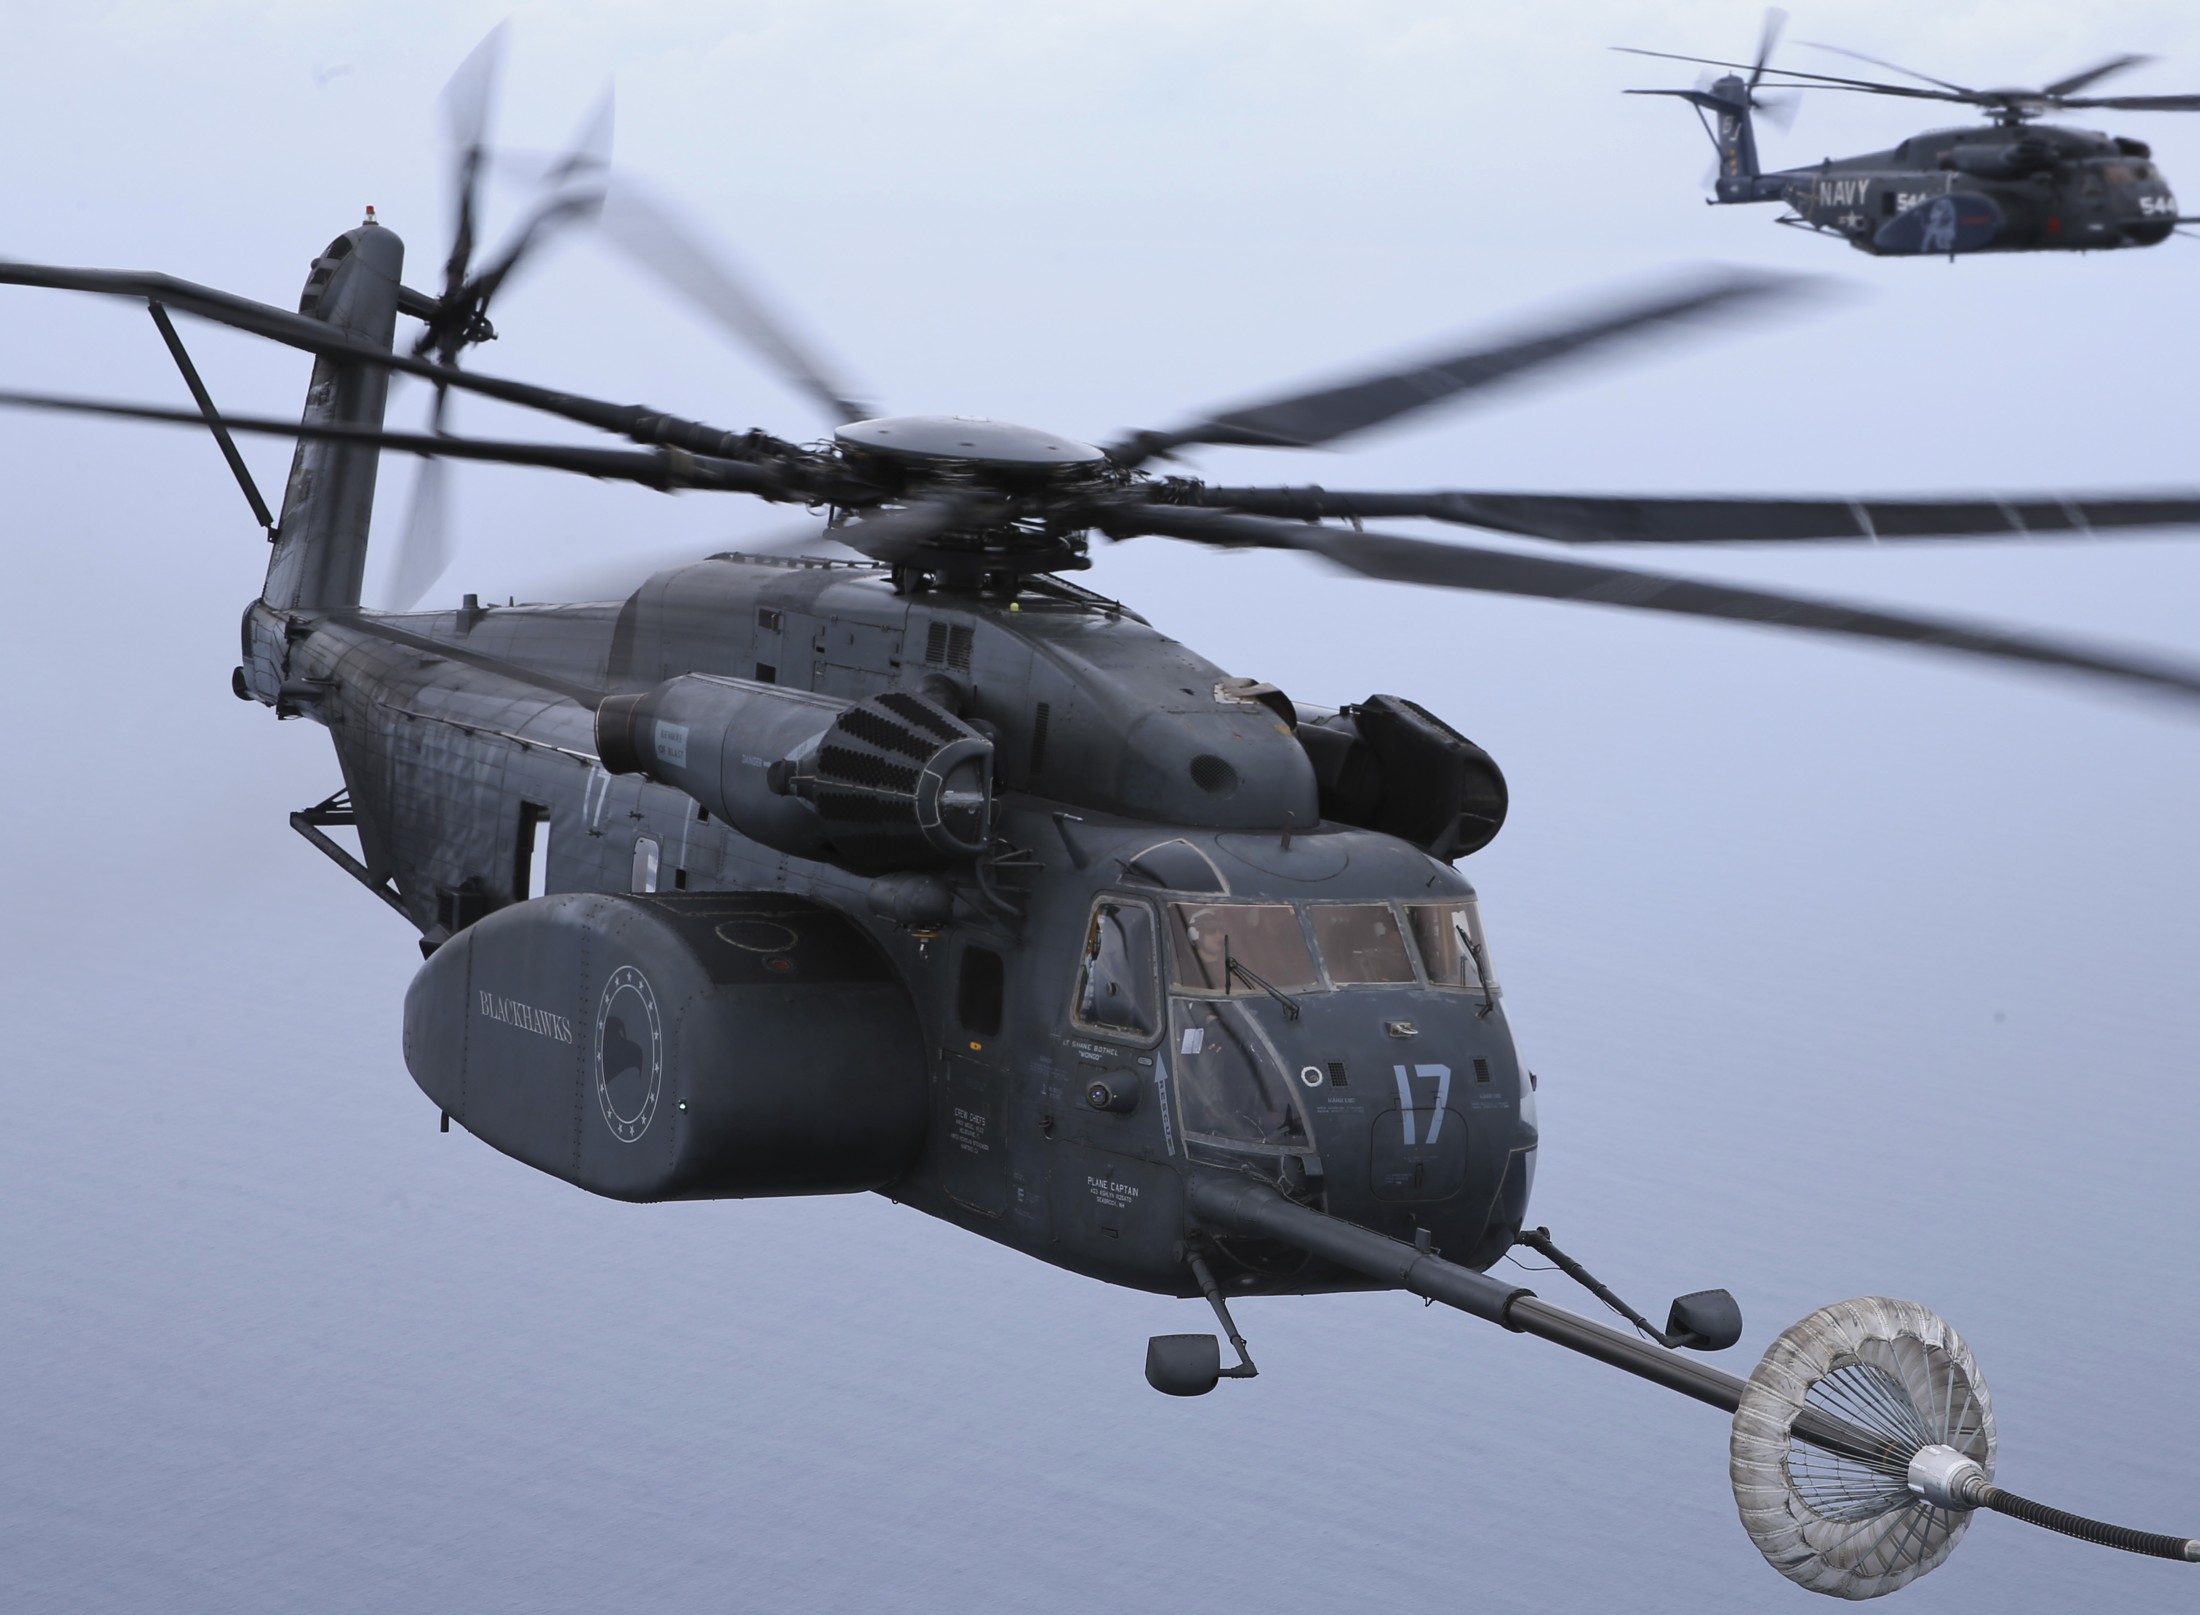 hm-15 blackhawks helicopter mine countermeasures squadron navy mh-53e sea dragon 17 refueling kc-130j hercules